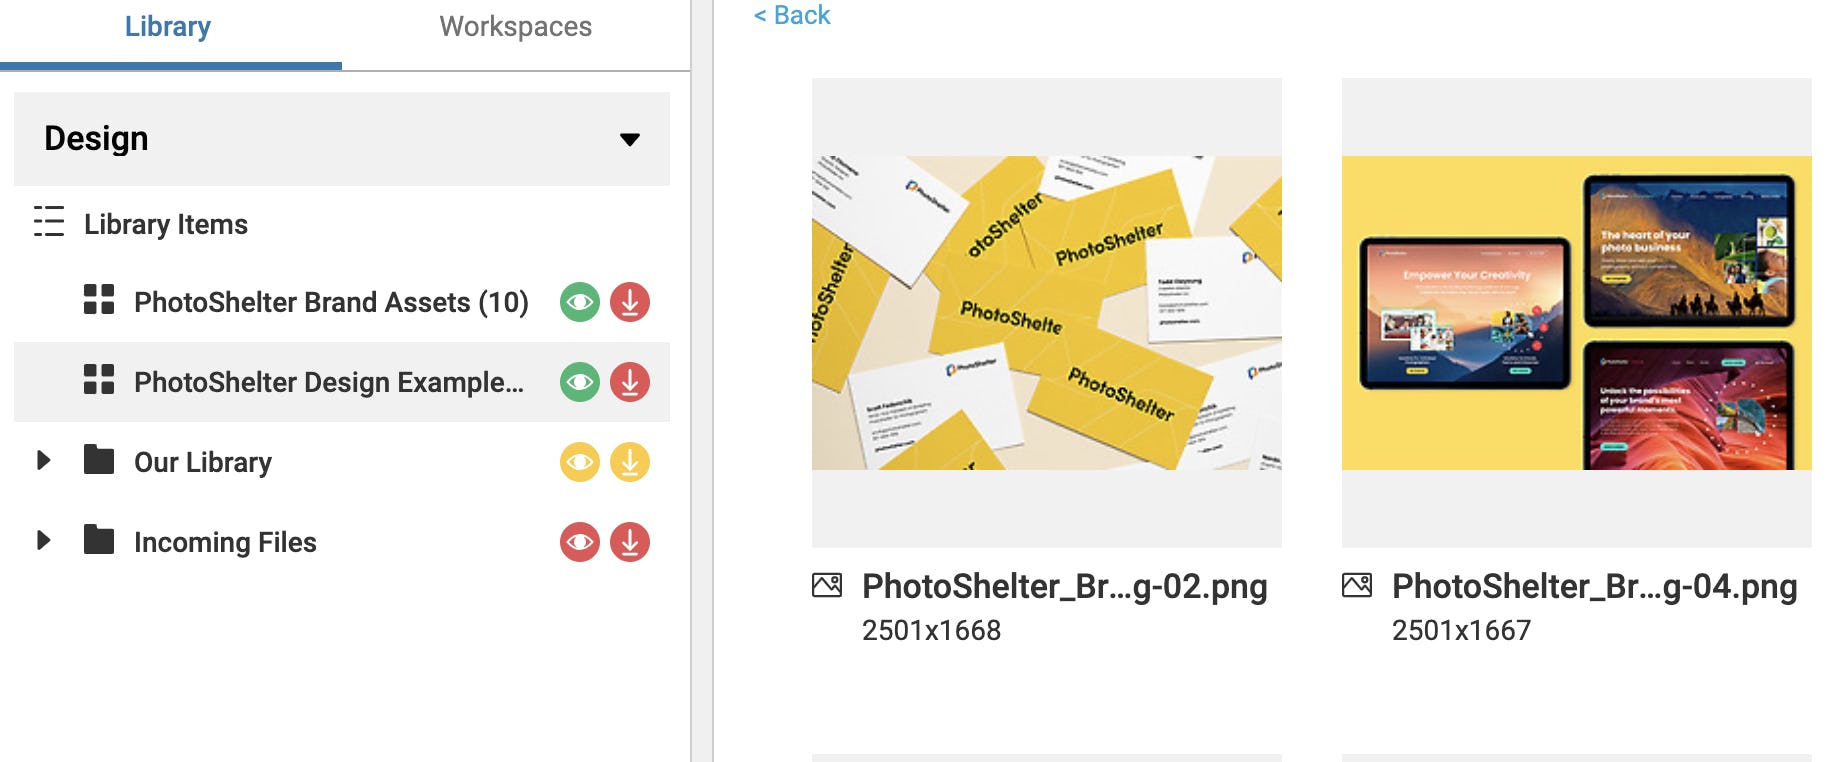 PhotoShelter for Brands Software - Member Library items